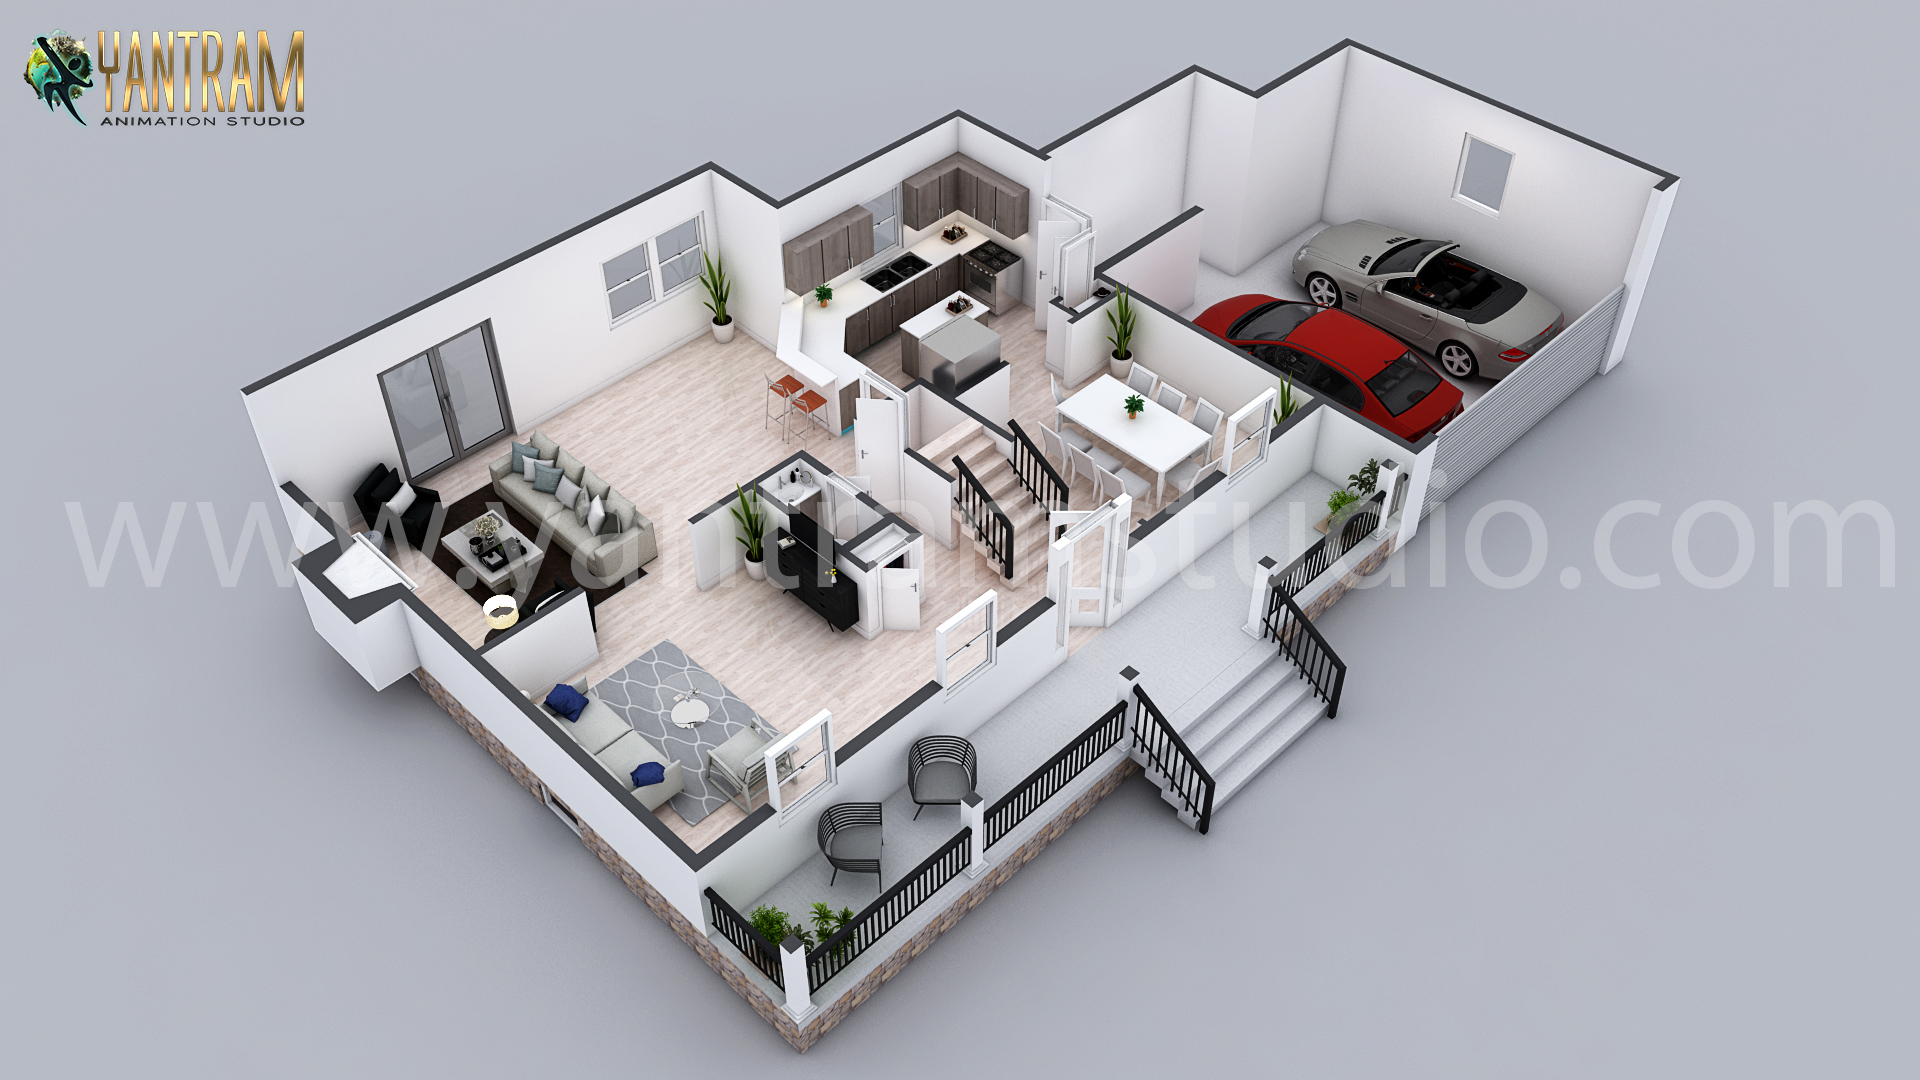 Residential 3d floor plan design by 3d architectural design studio 2021, Dallas – Texas